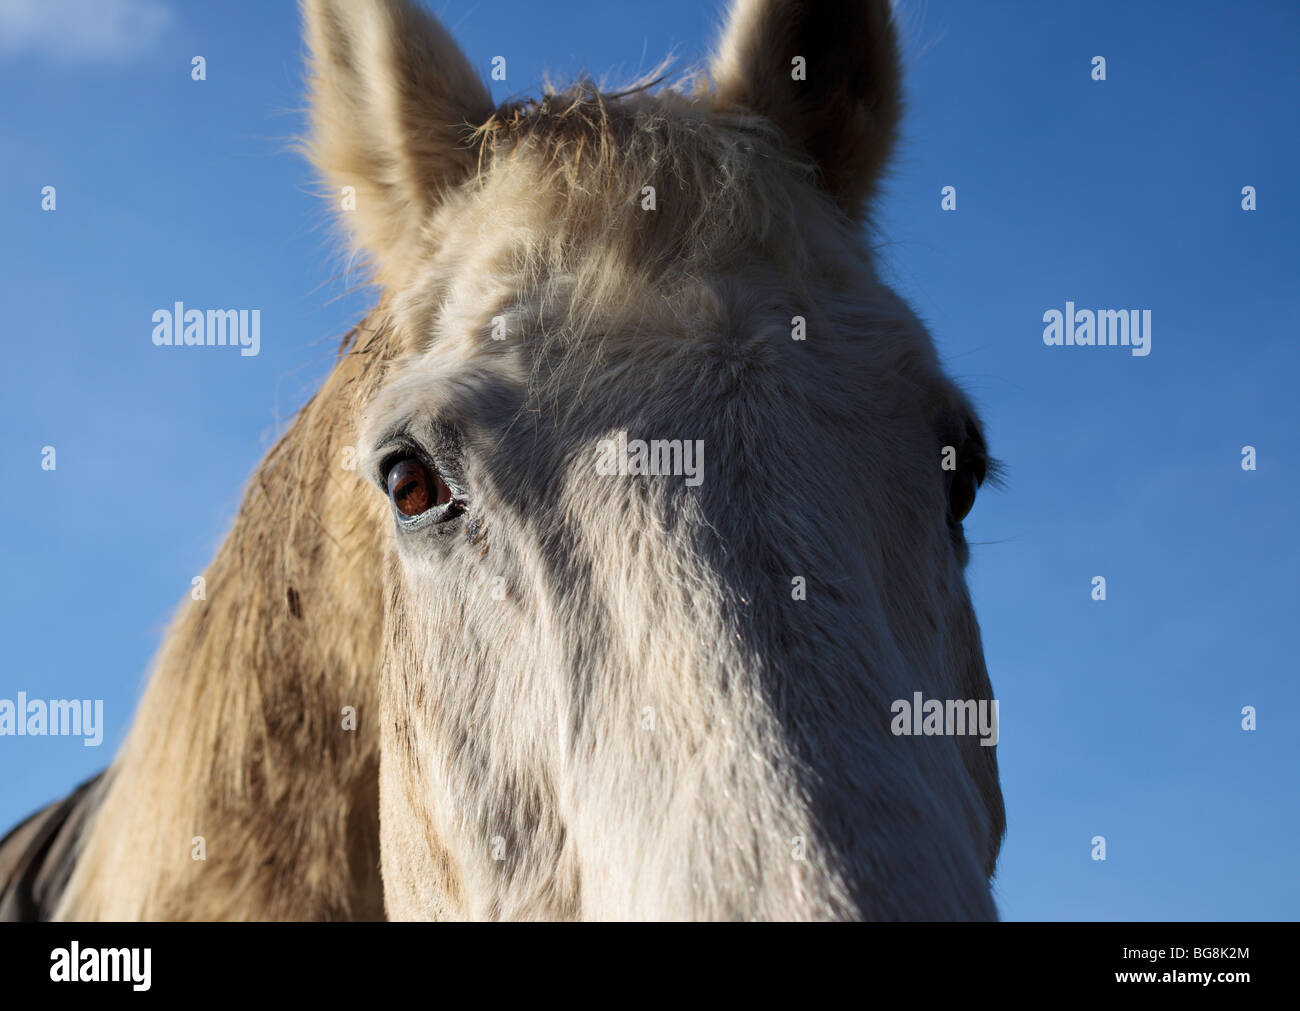 Horse eye portrait Stock Photo